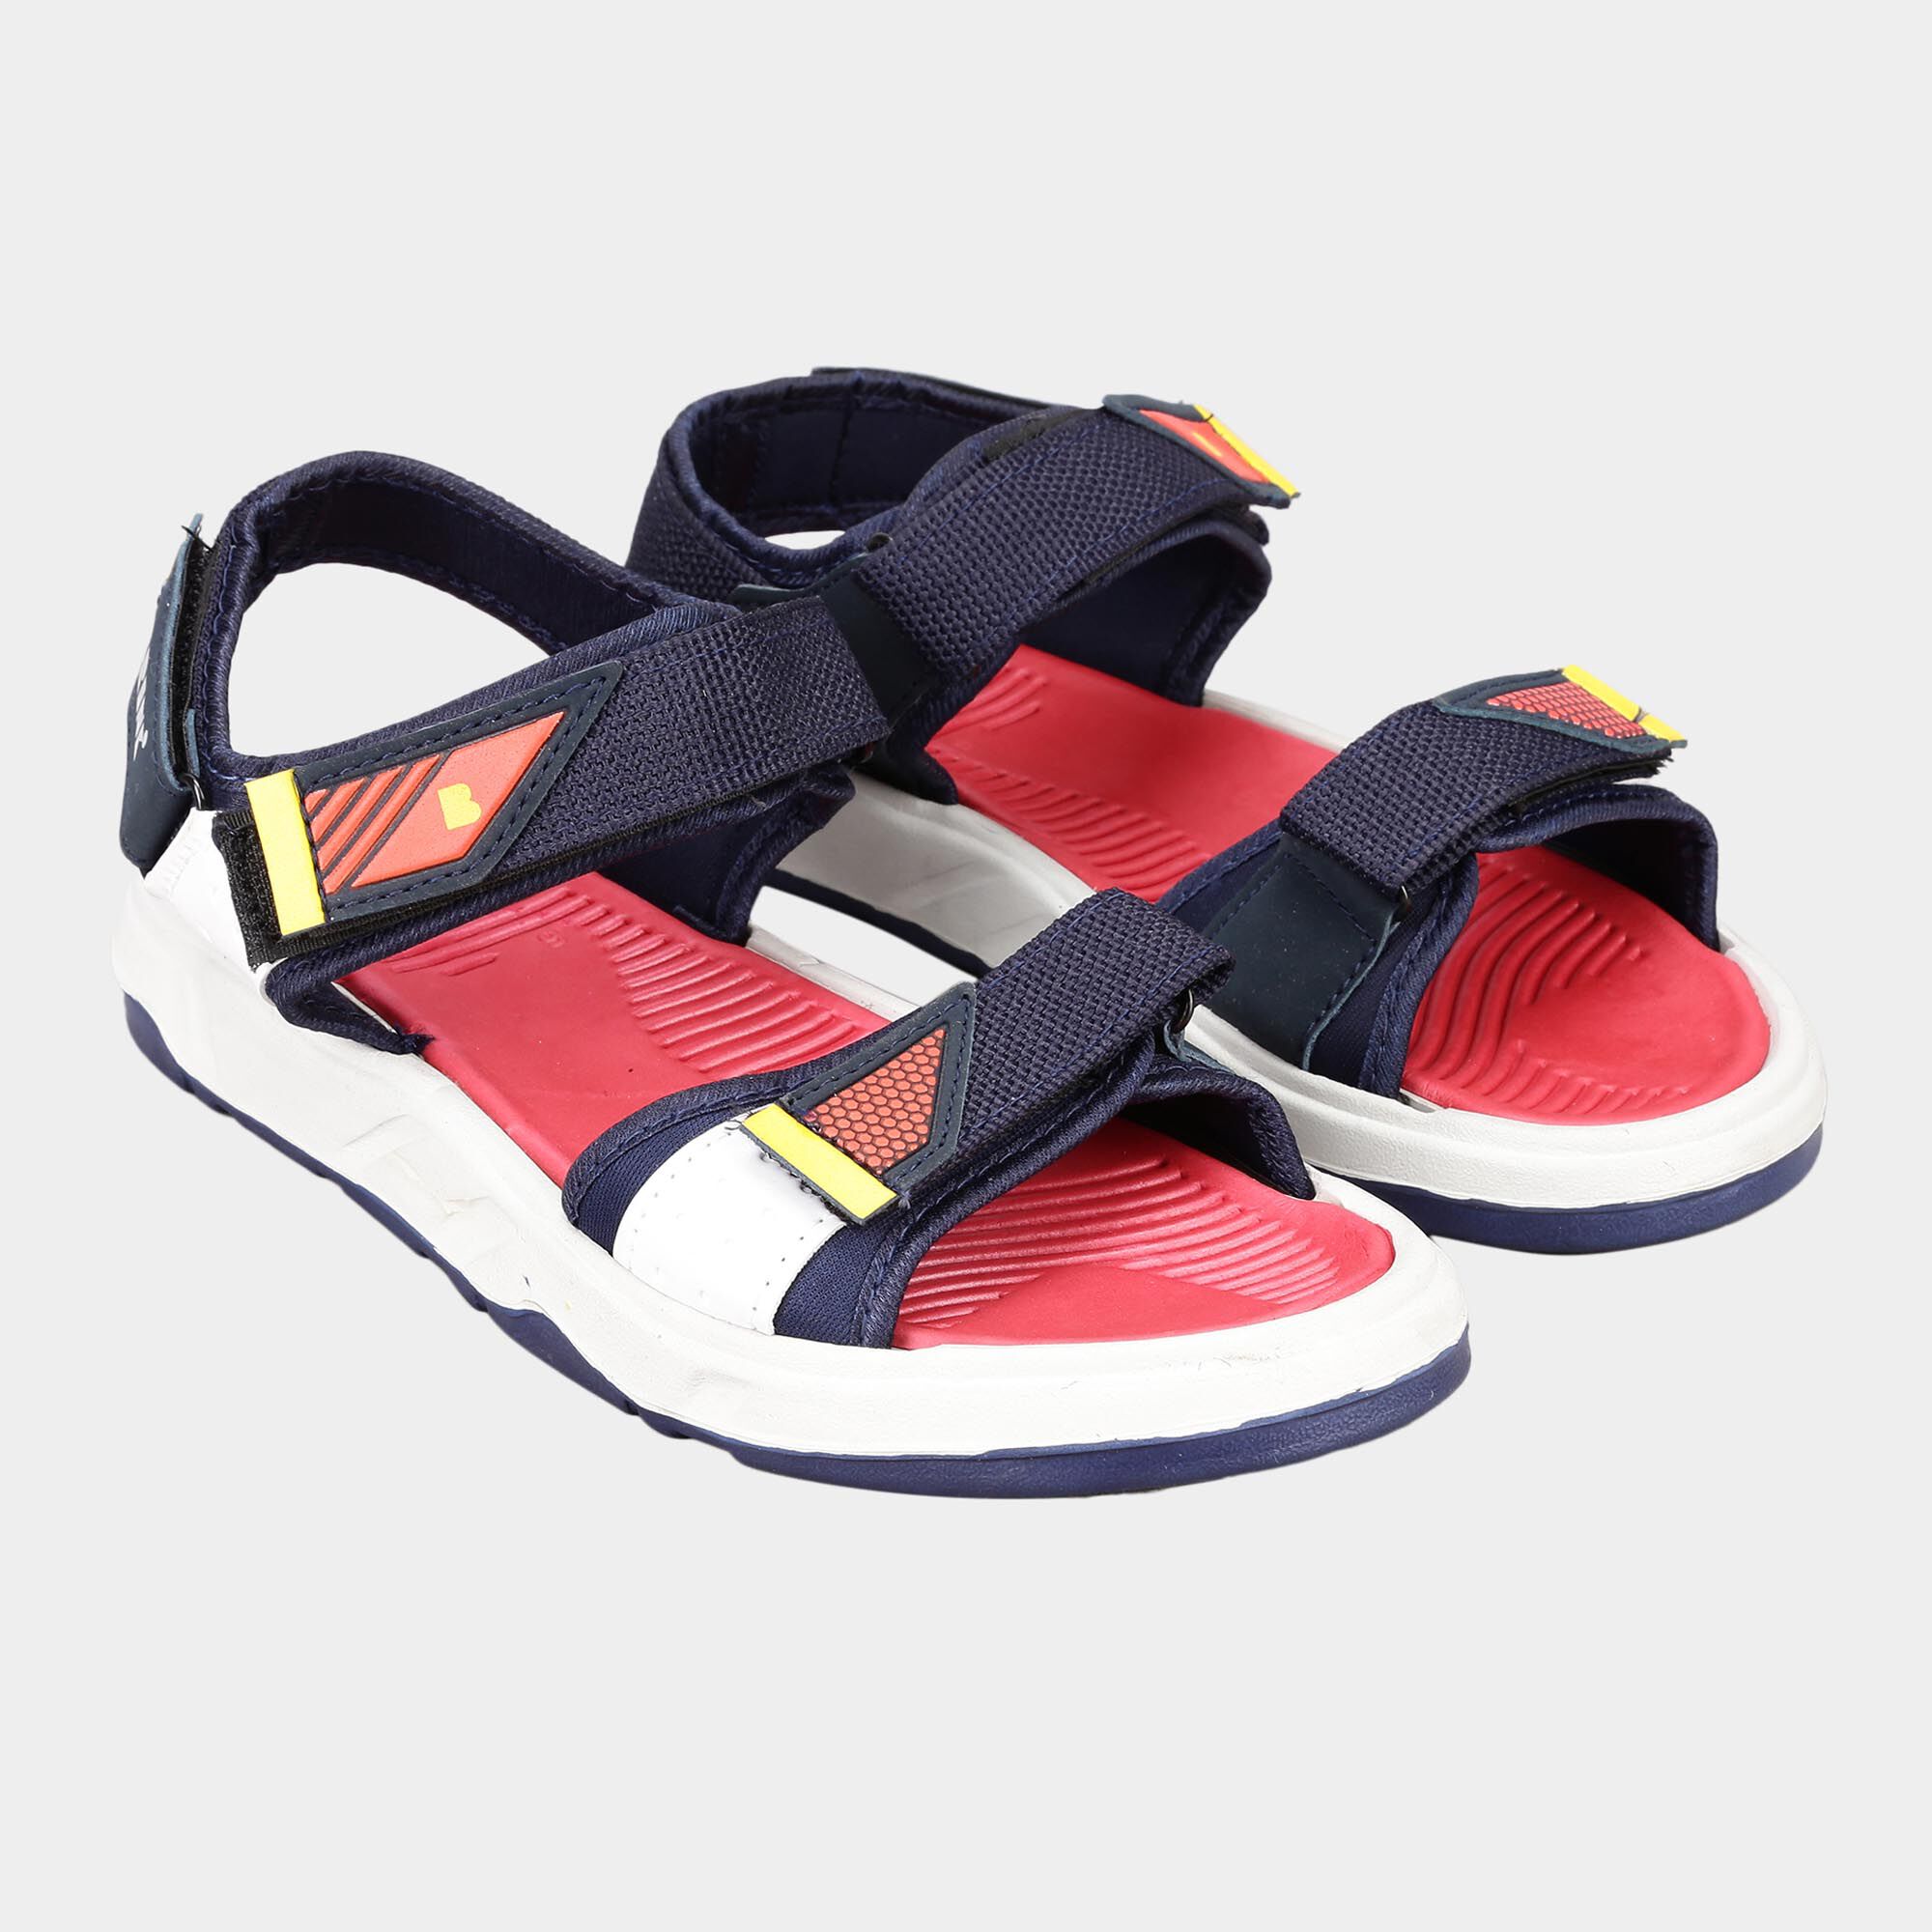 I Love Comfort Sandals Womens 9M Fisherman Flats Slip On Beige Casual  Closed Toe | eBay